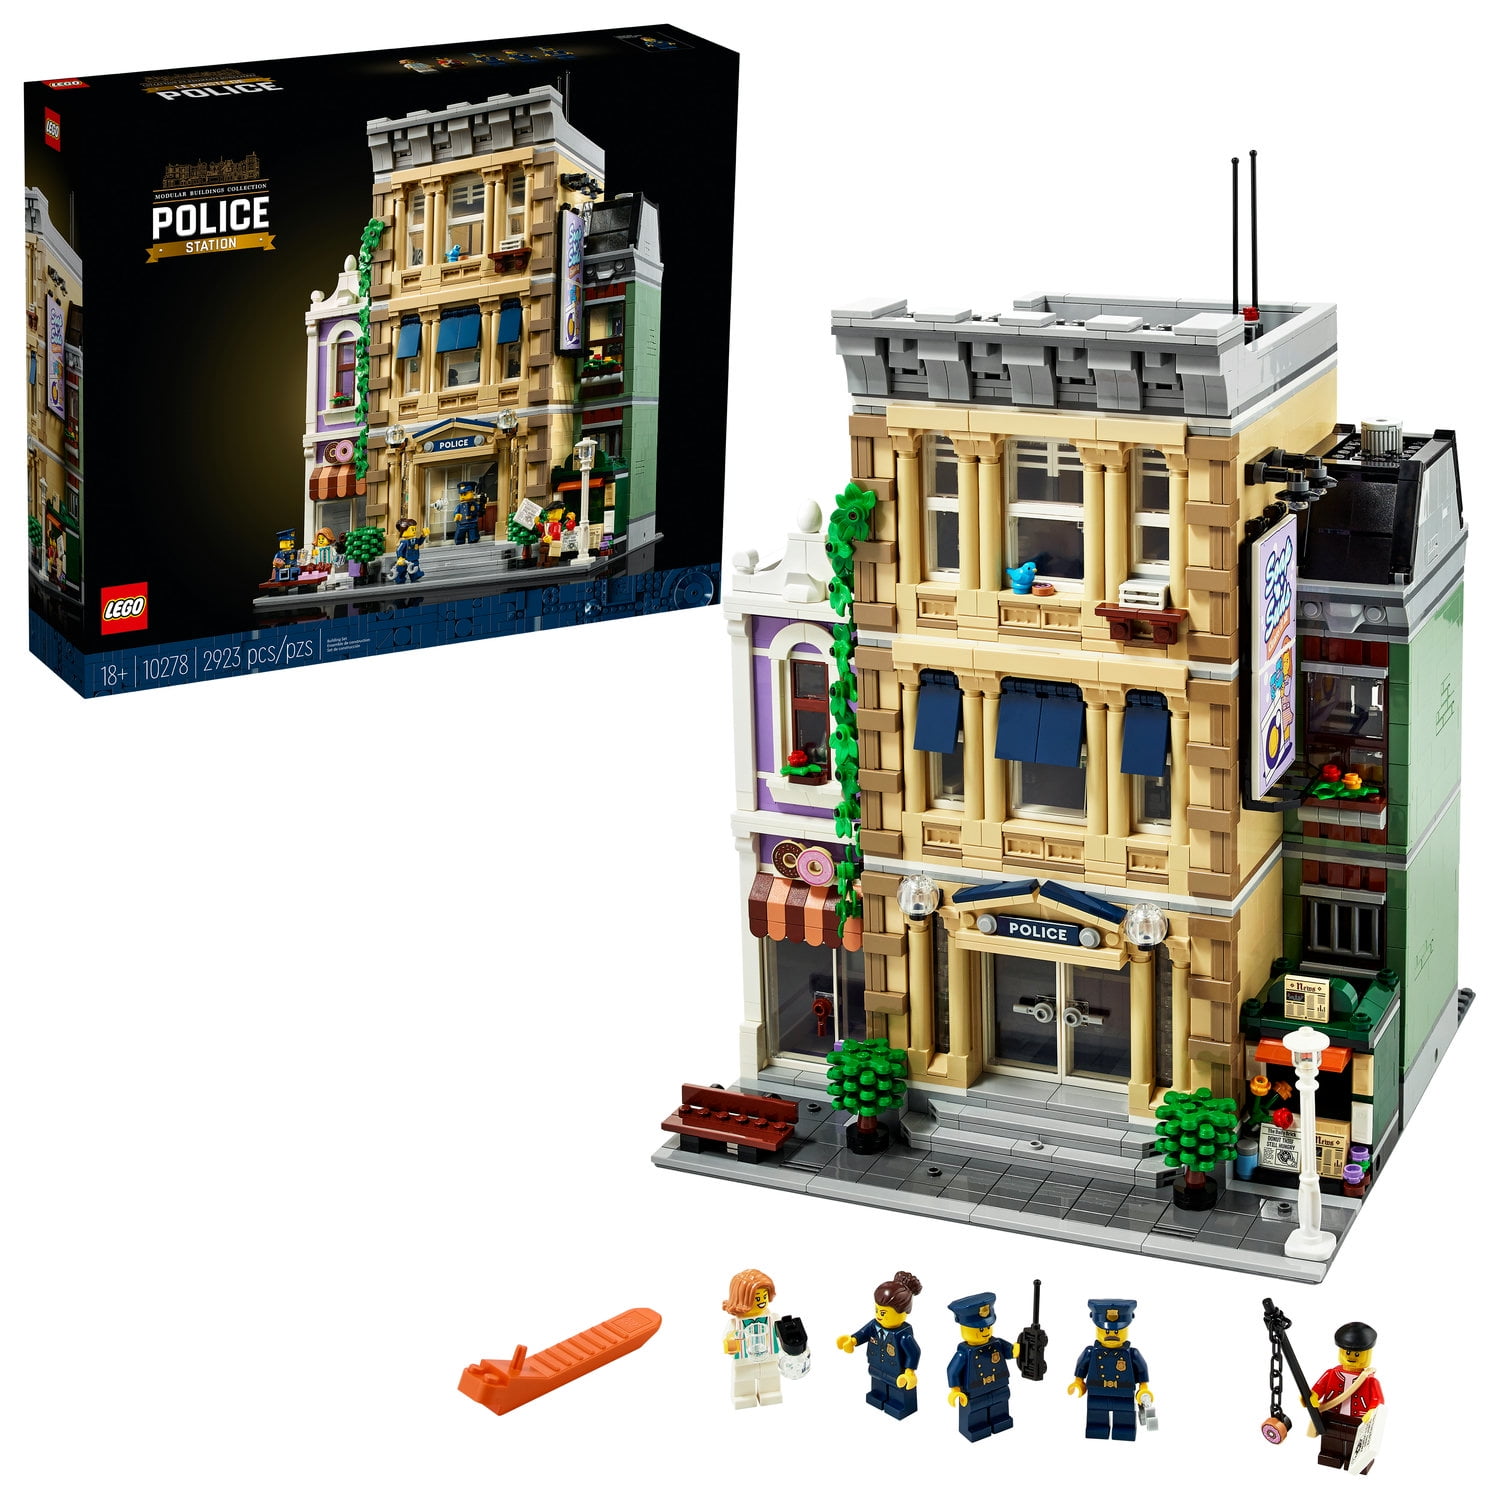 4657559 LEGO Creator Grand Emporium 10211 Discontinued by manufacturer